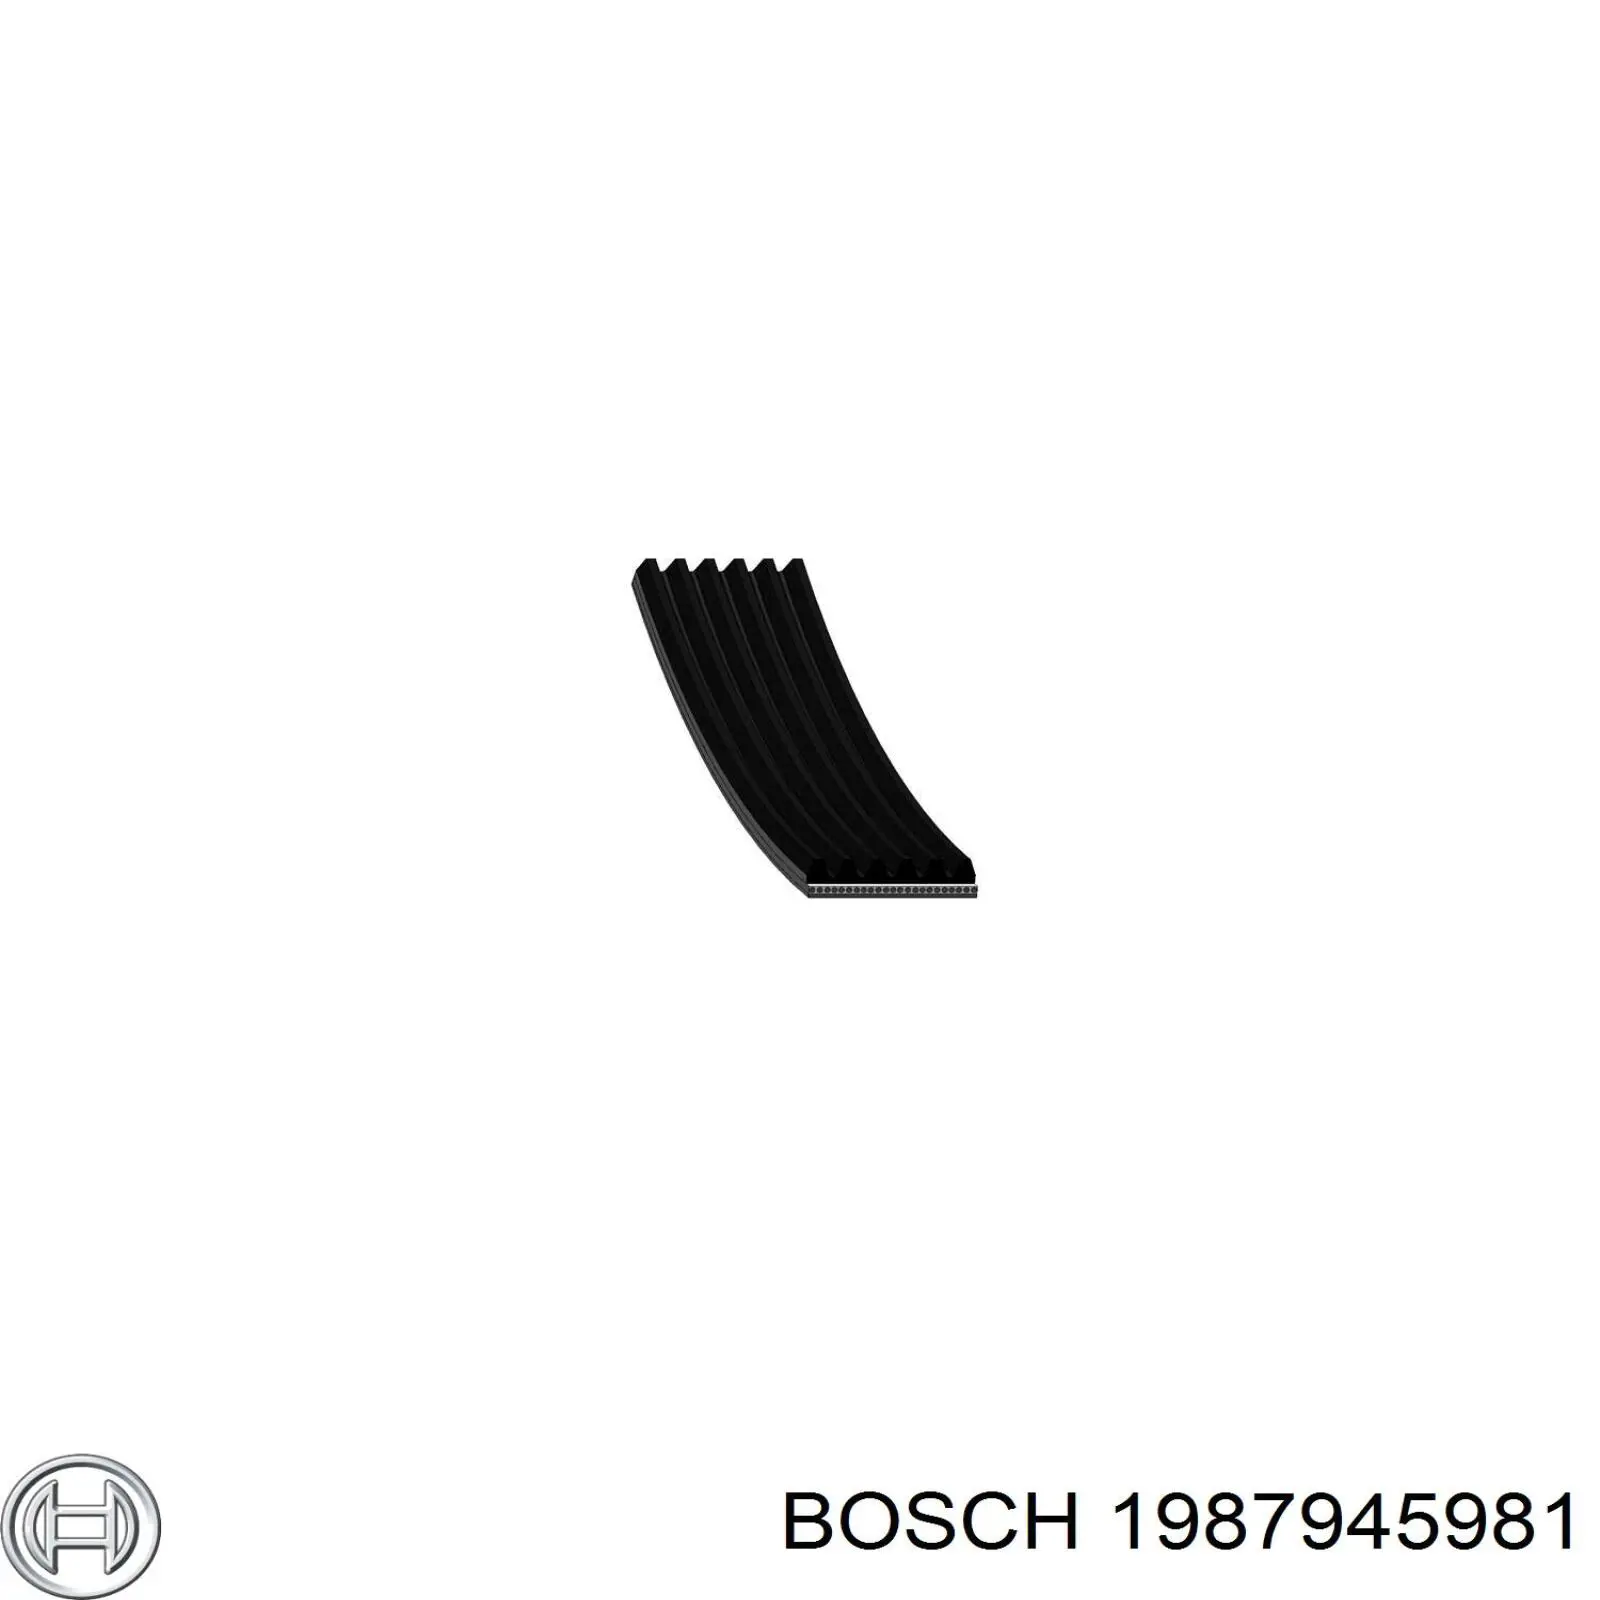 1987945981 Bosch correa trapezoidal